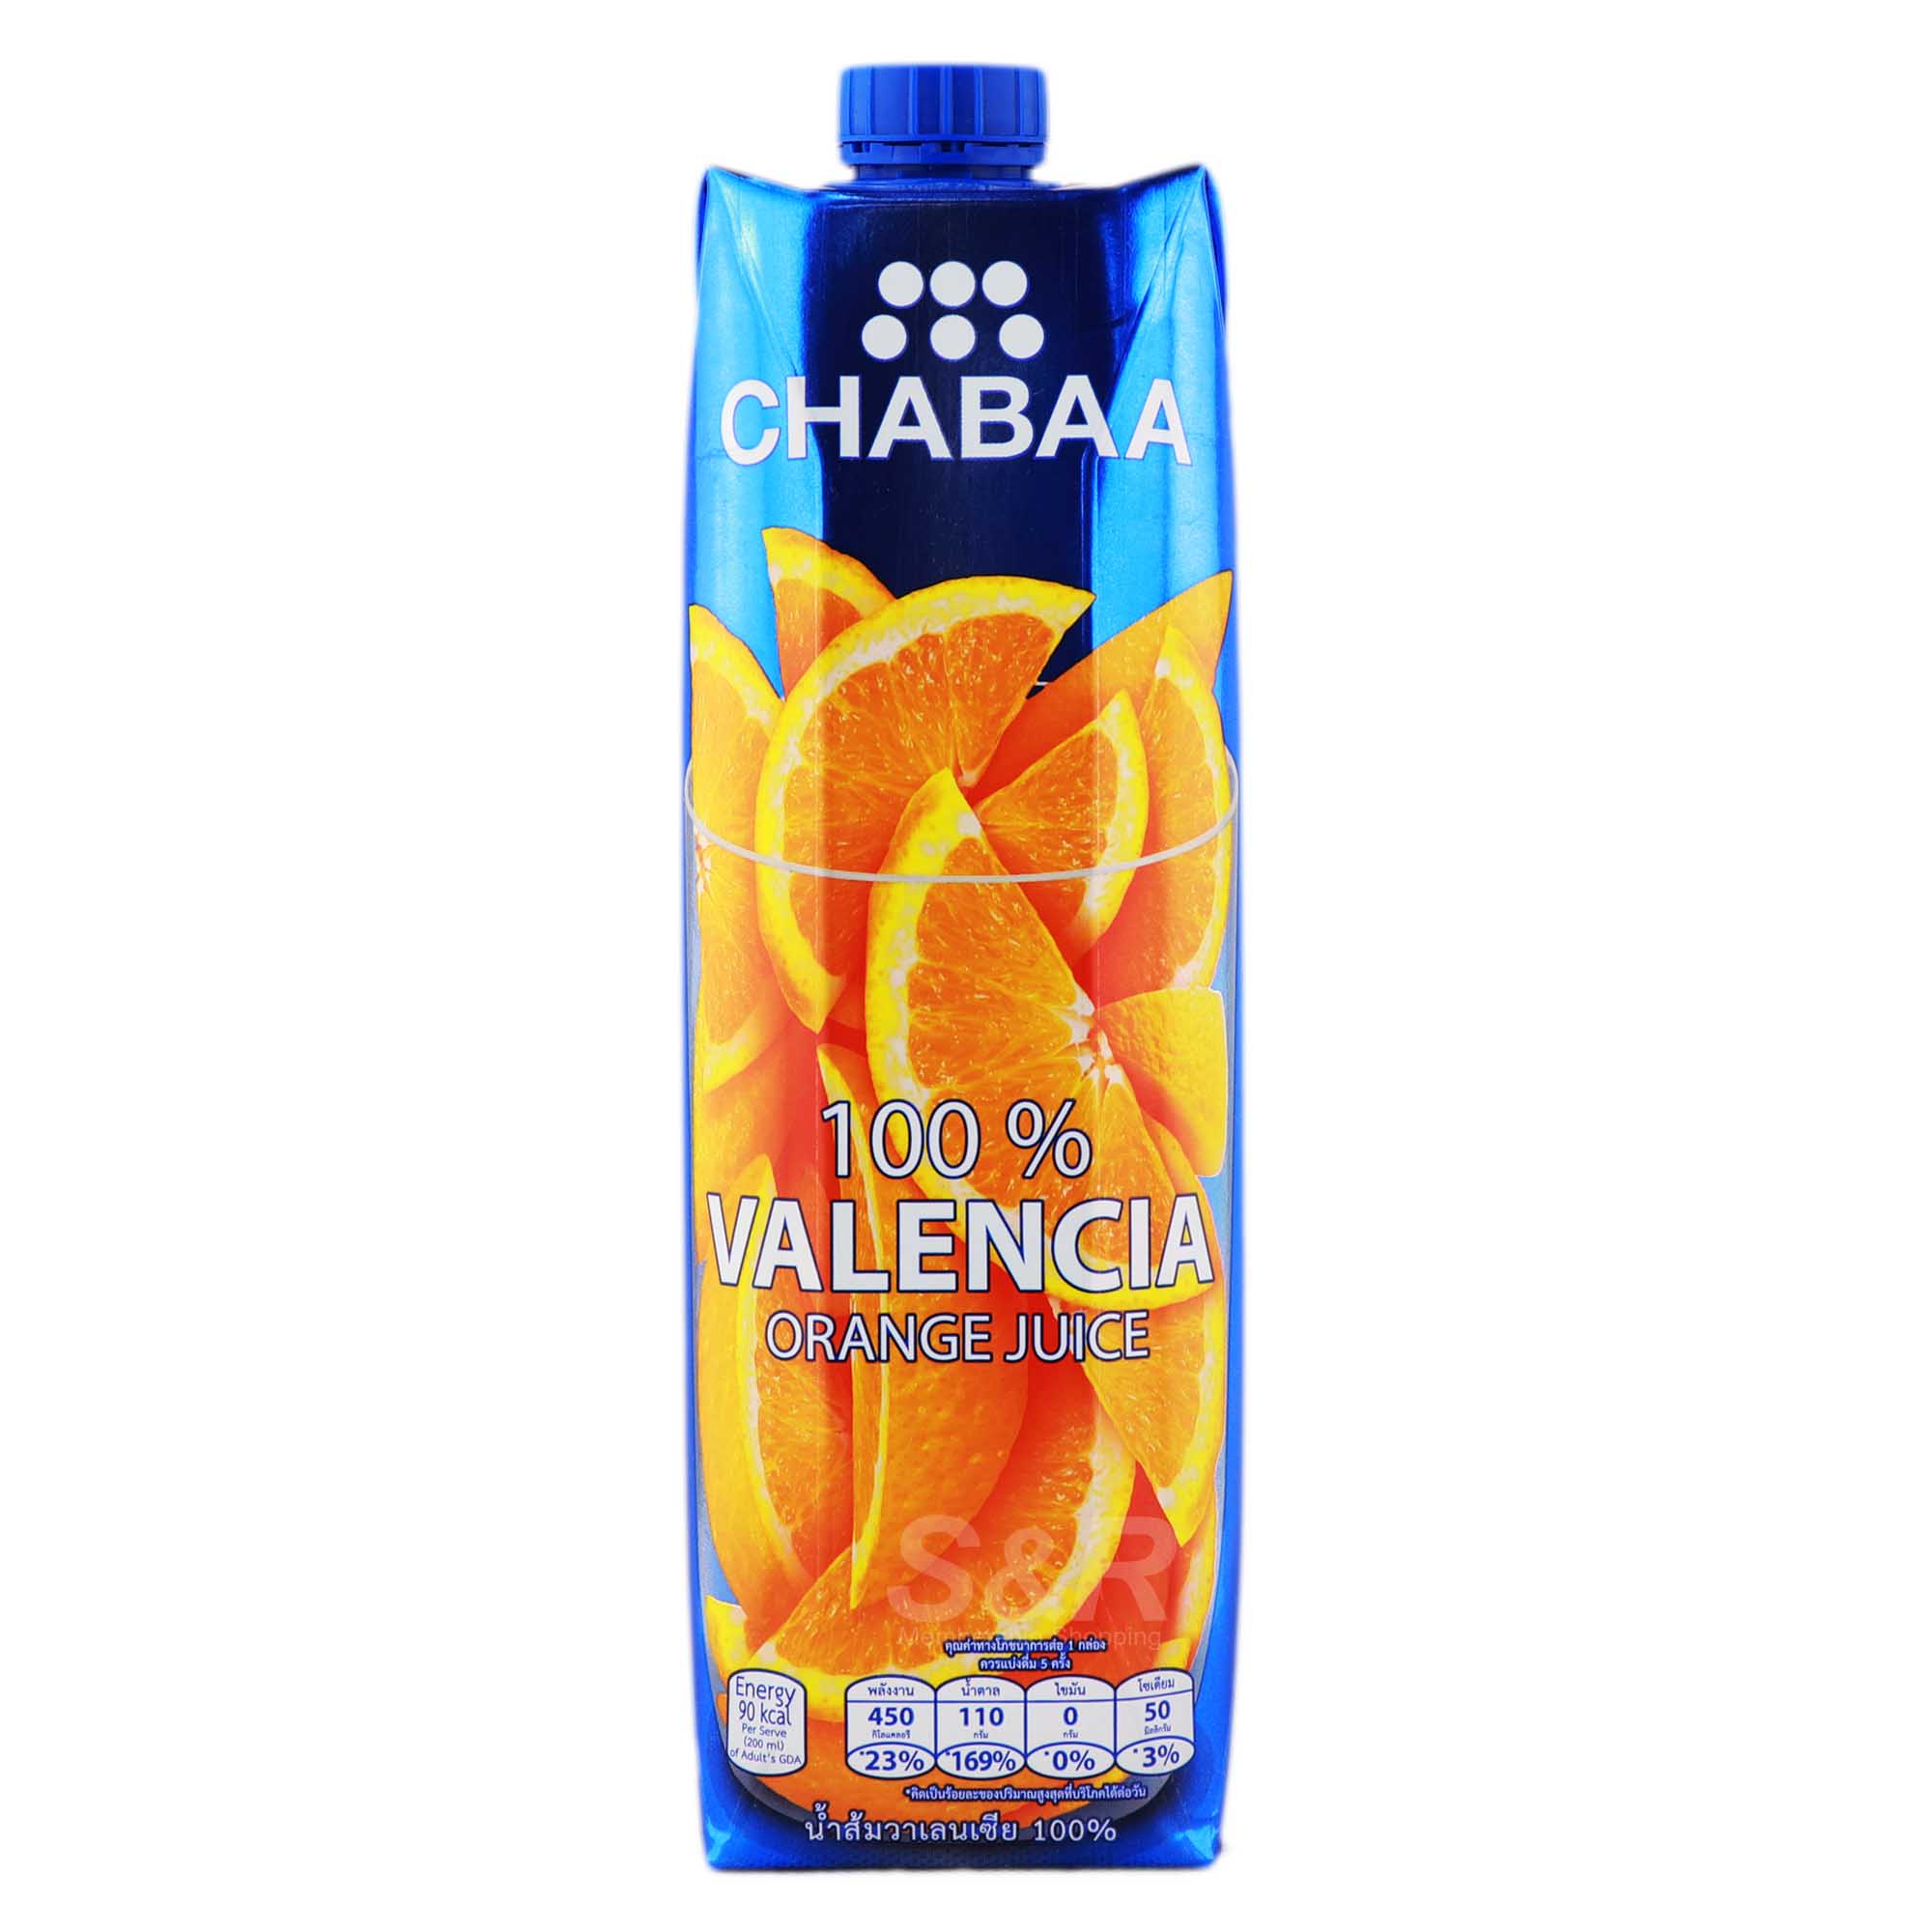 Chabaa Valencia Orange Juice (1L)